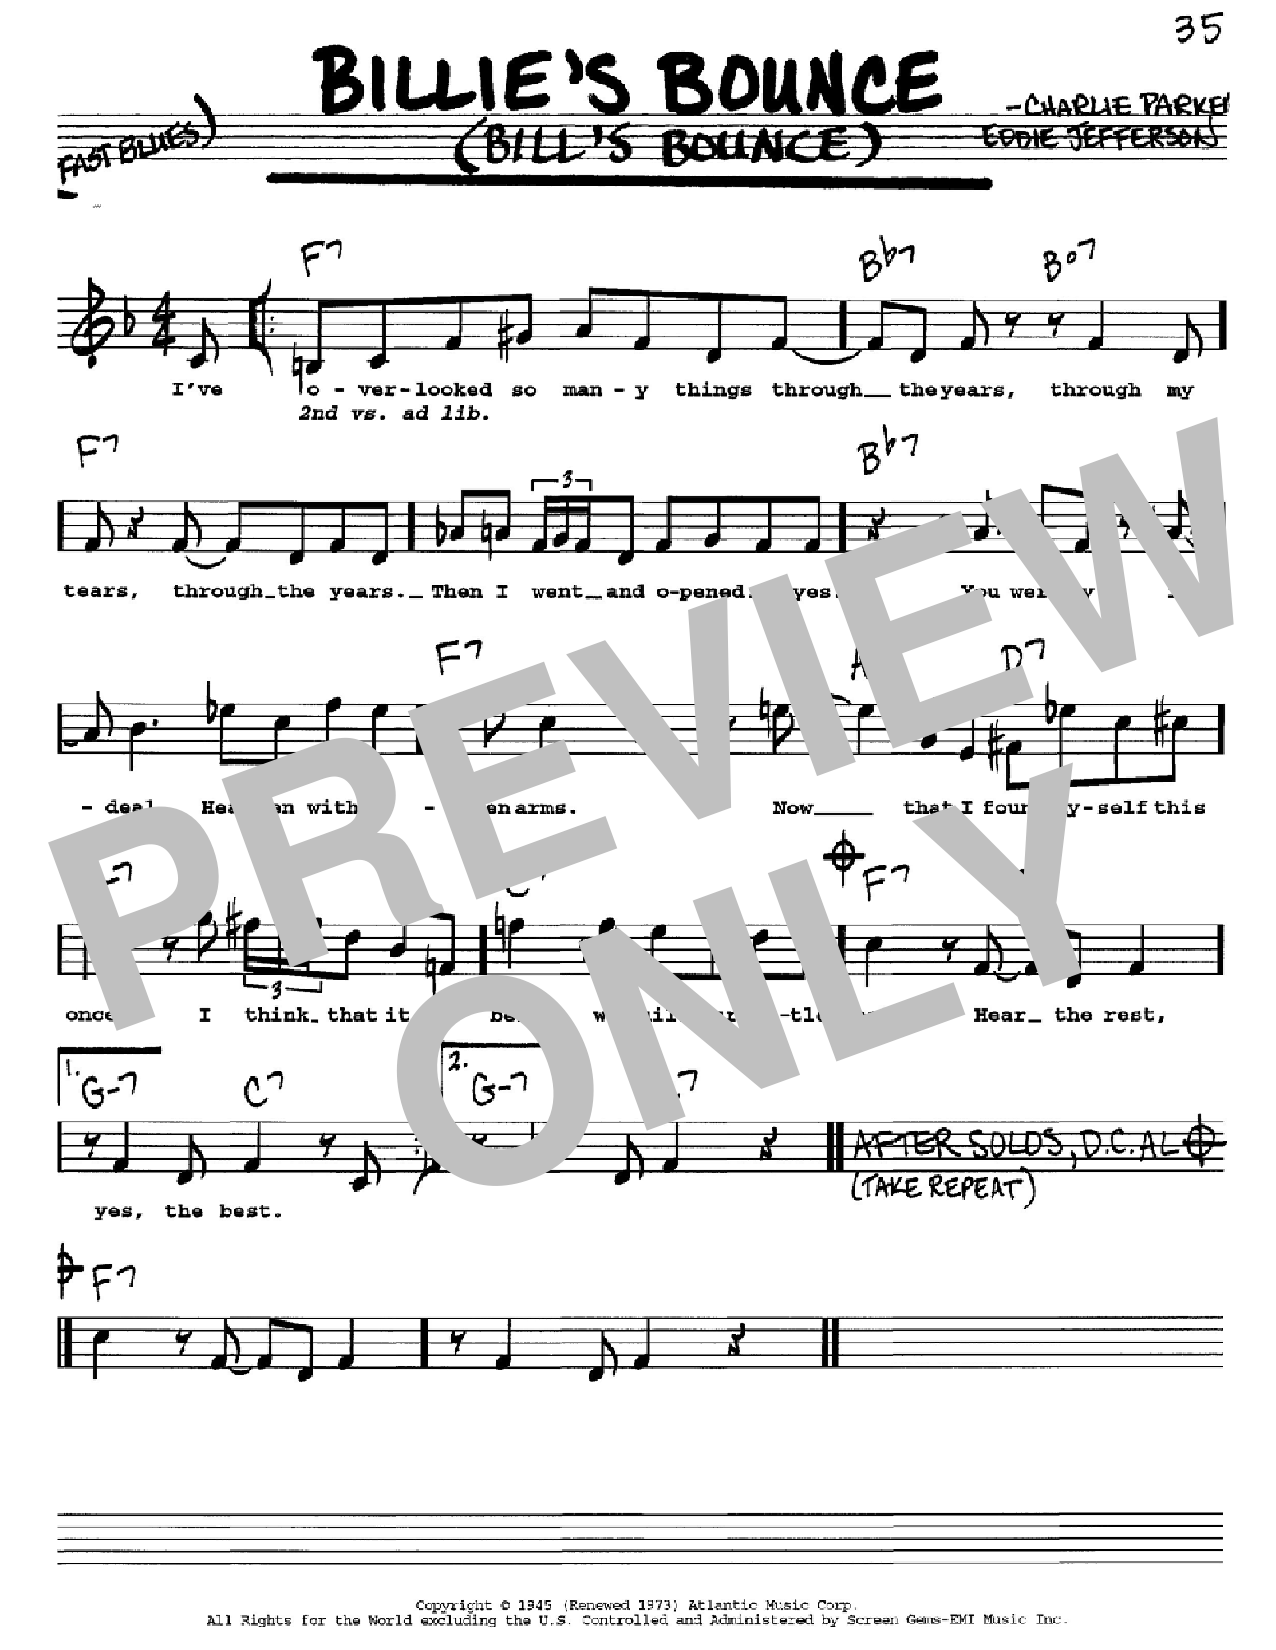 Download Charlie Parker Billie's Bounce (Bill's Bounce) Sheet Music